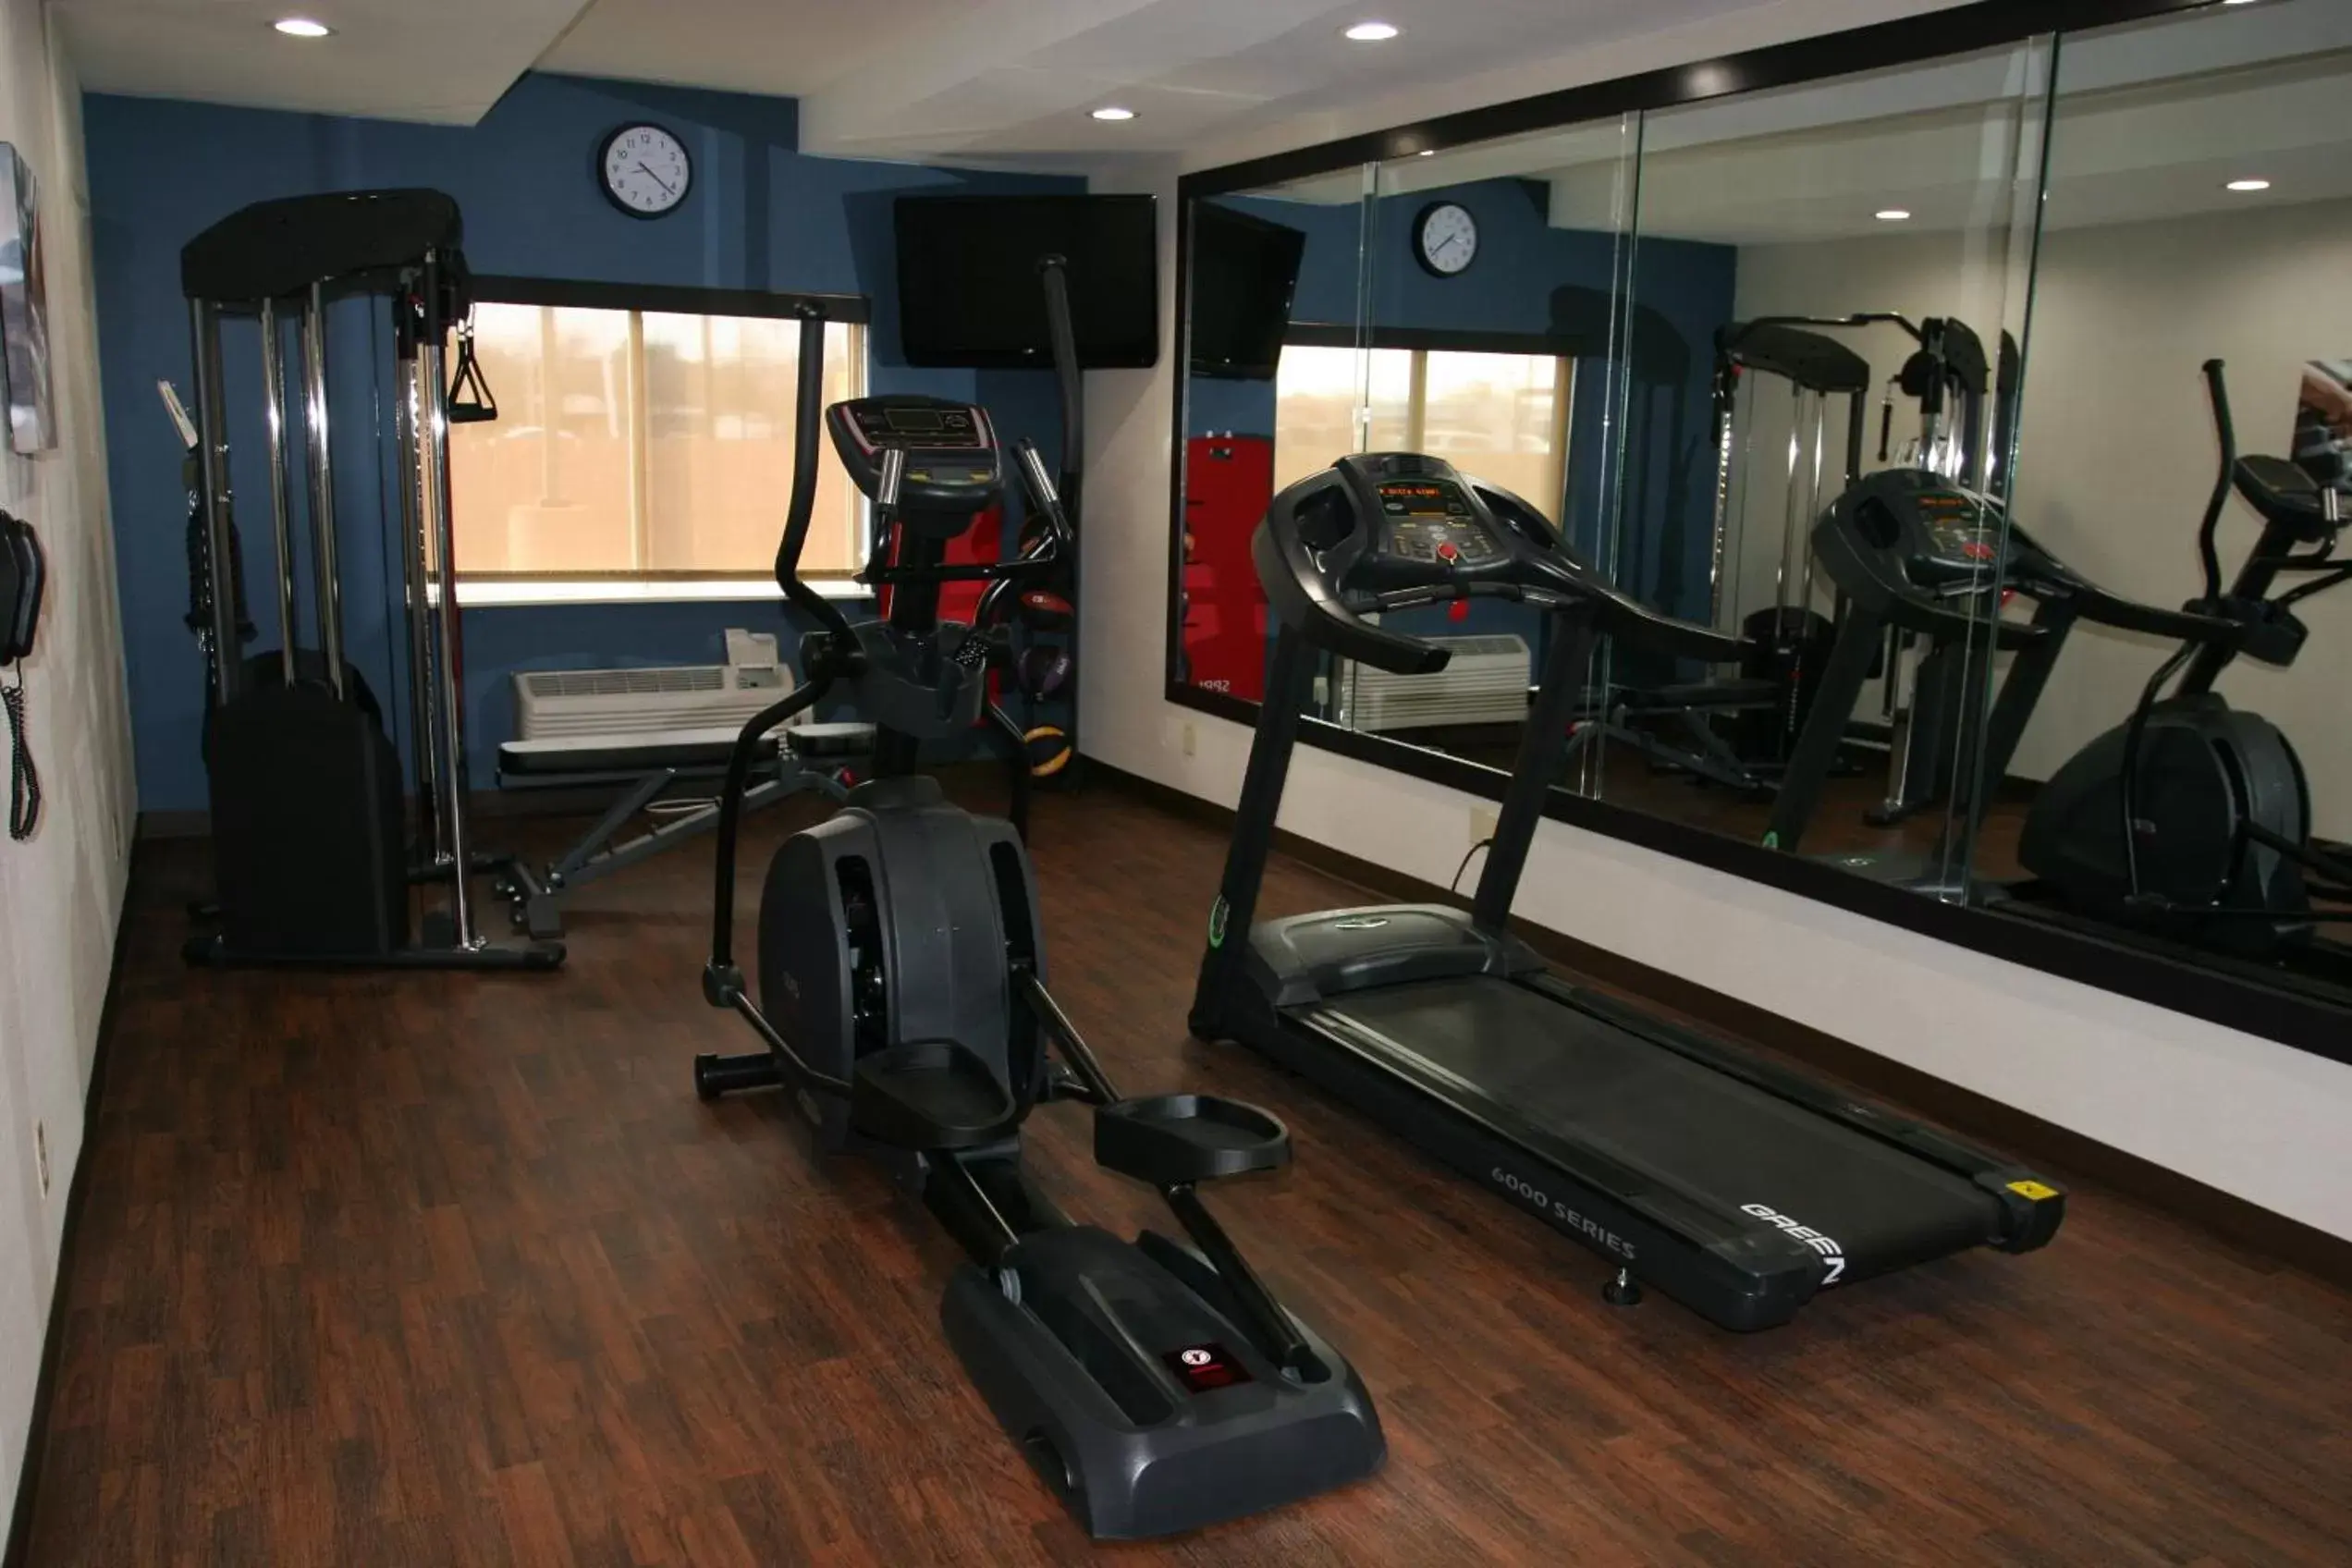 Fitness centre/facilities, Fitness Center/Facilities in Comfort Inn Wichita Falls near University